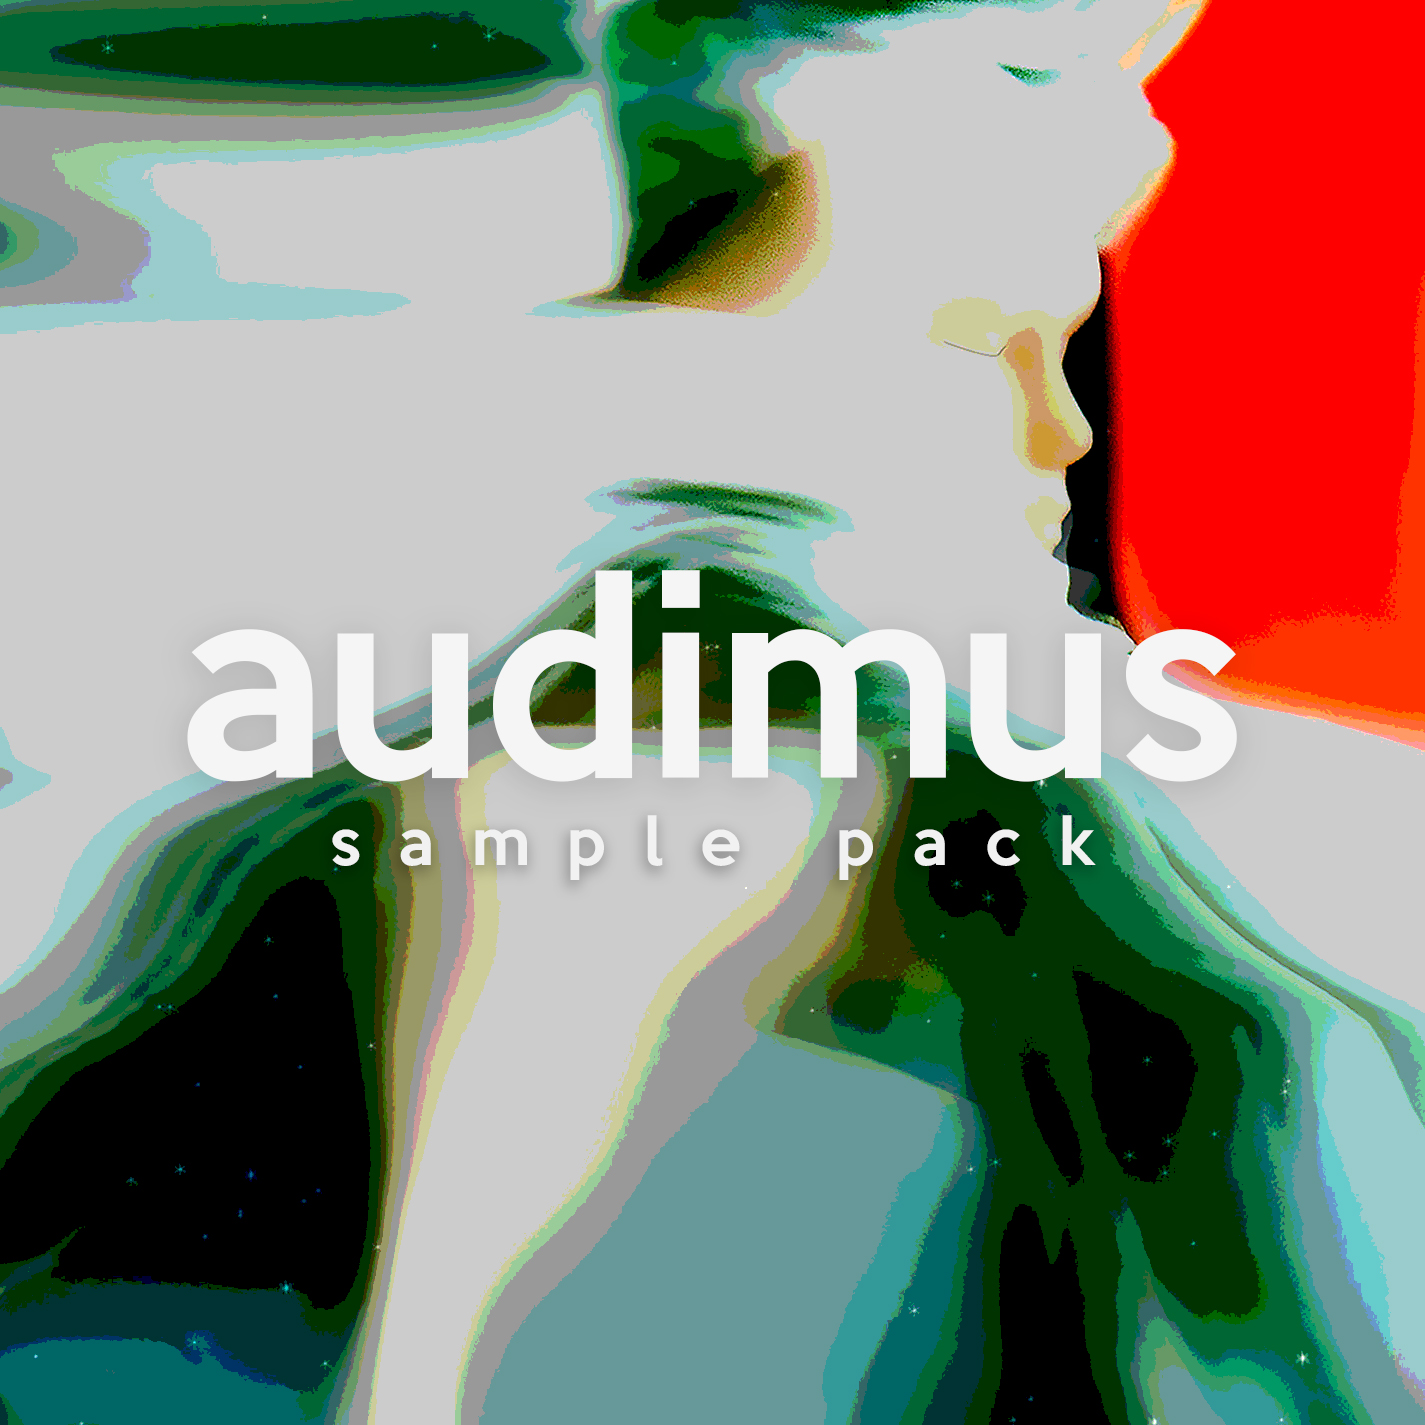 deep house sample pack rar download free